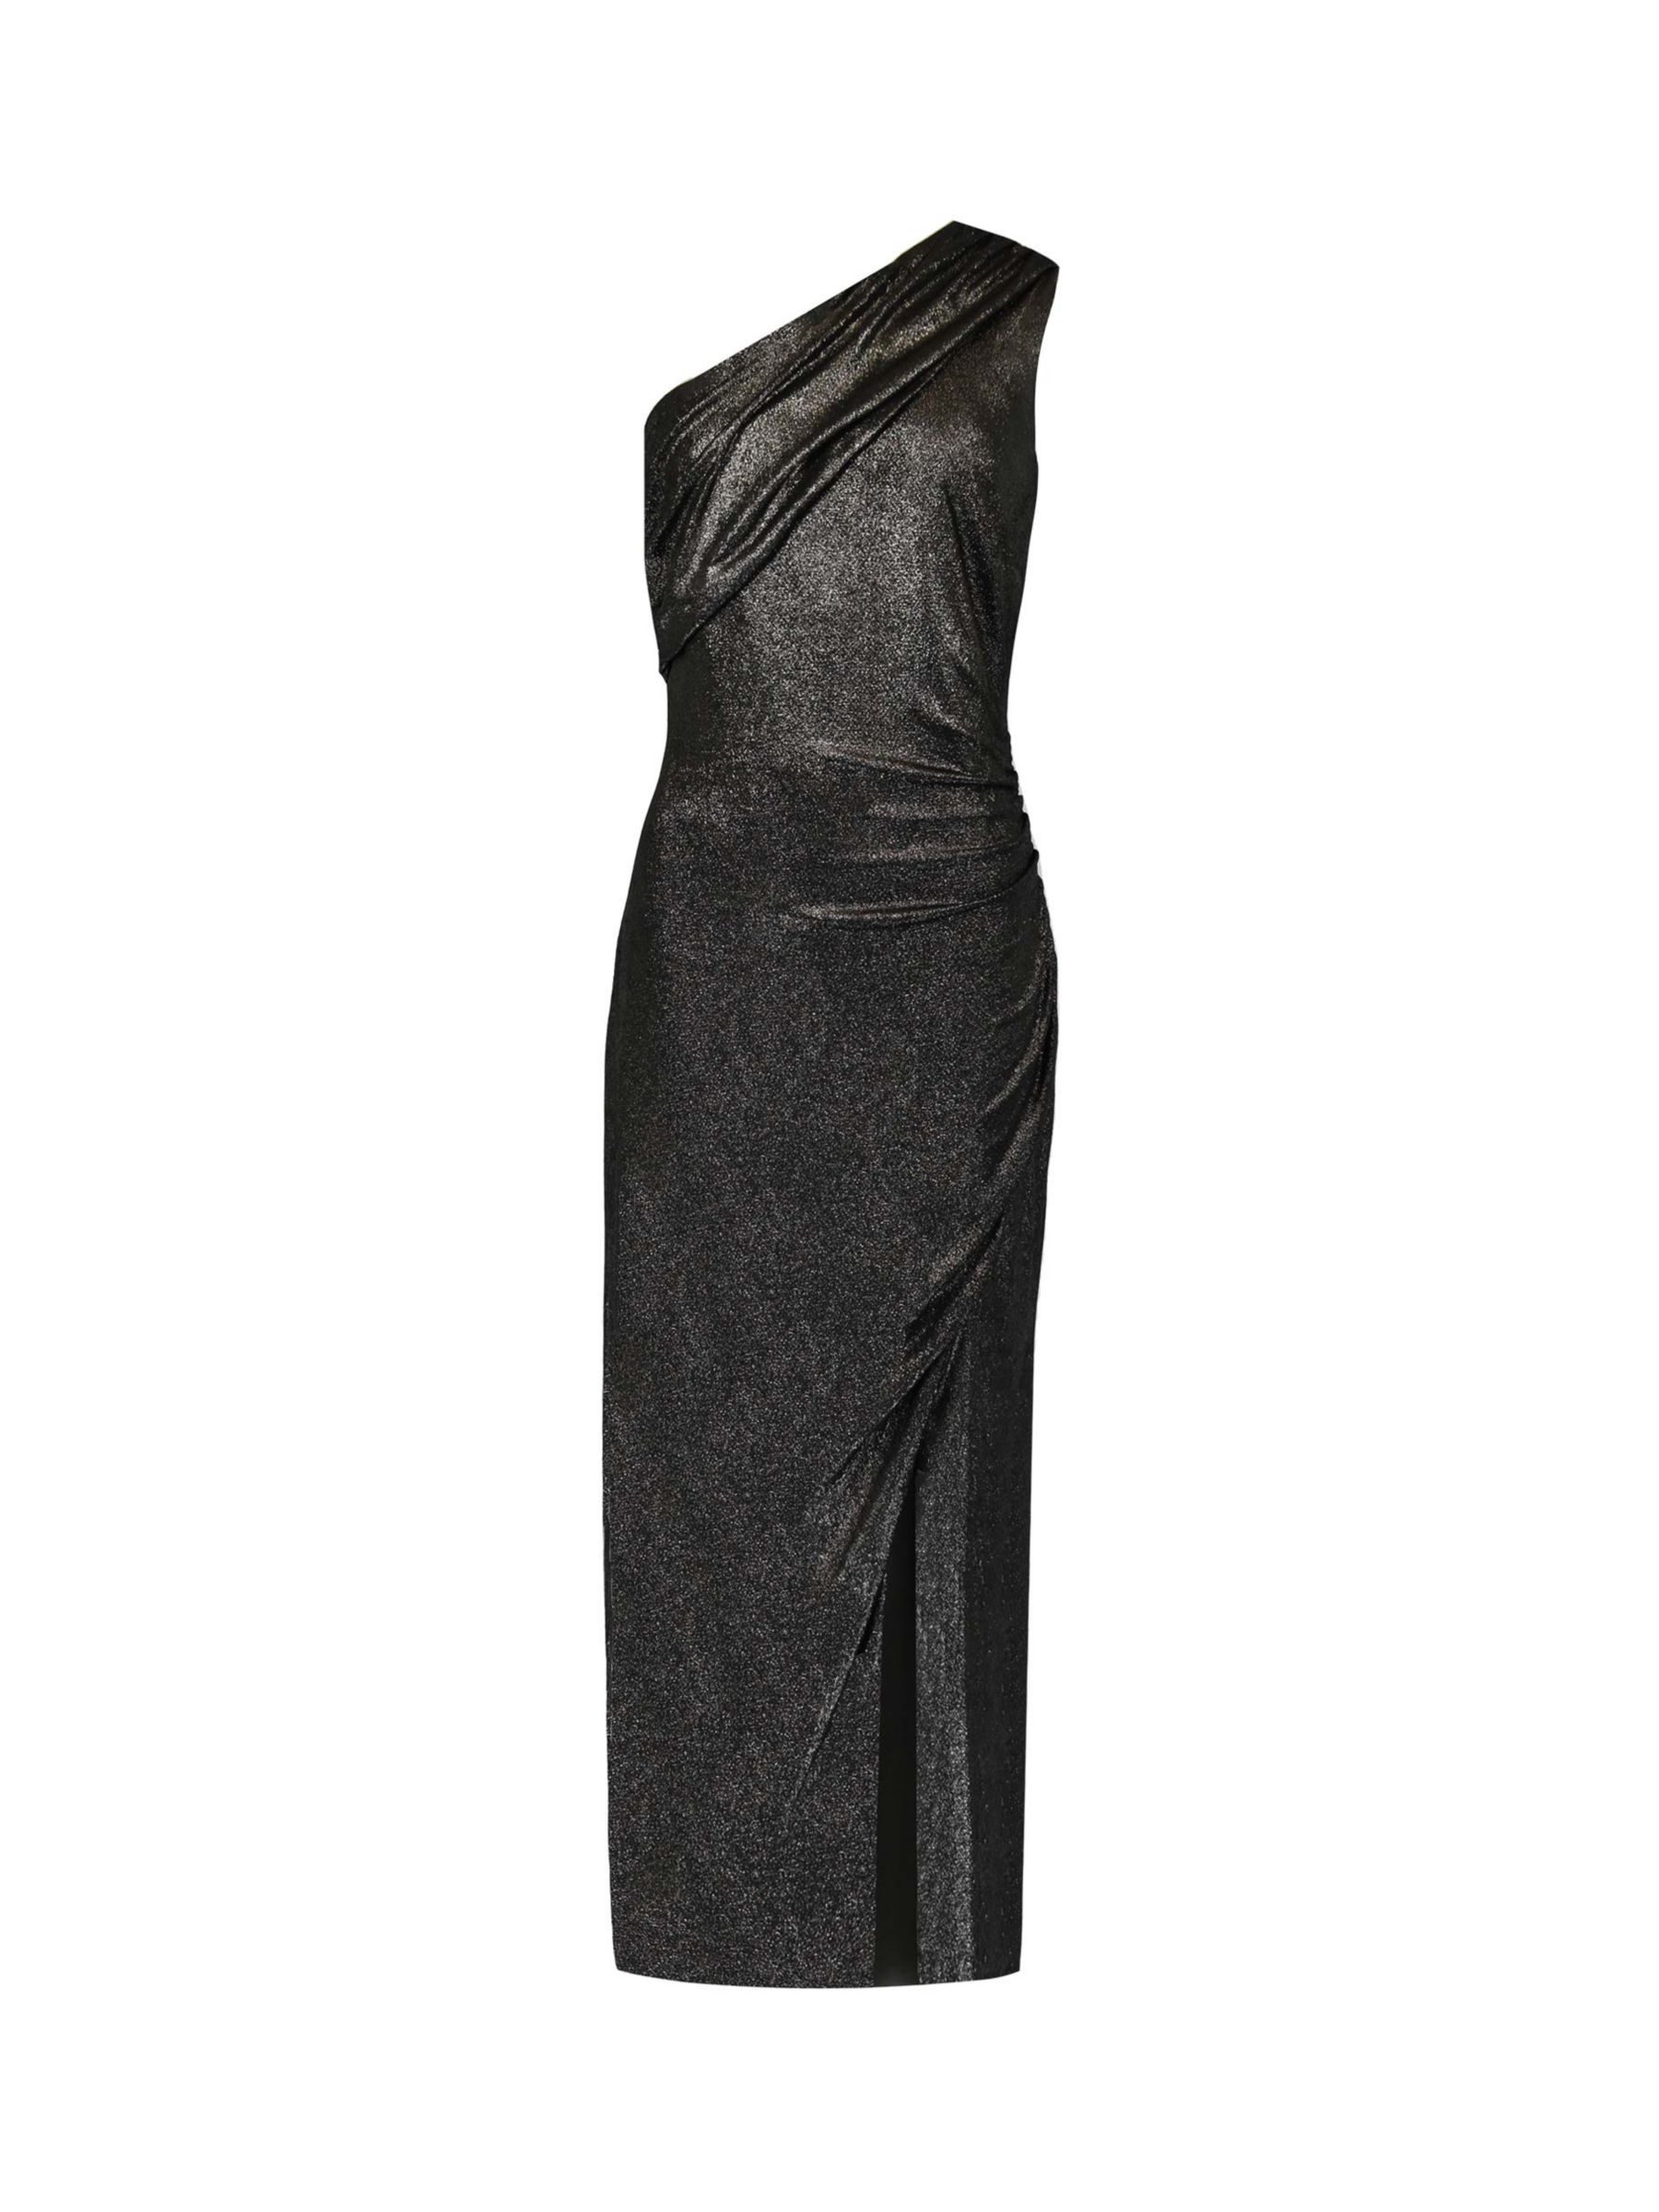 Ro&Zo Metallic One Shoulder Midi Dress, Black/Silver, 10